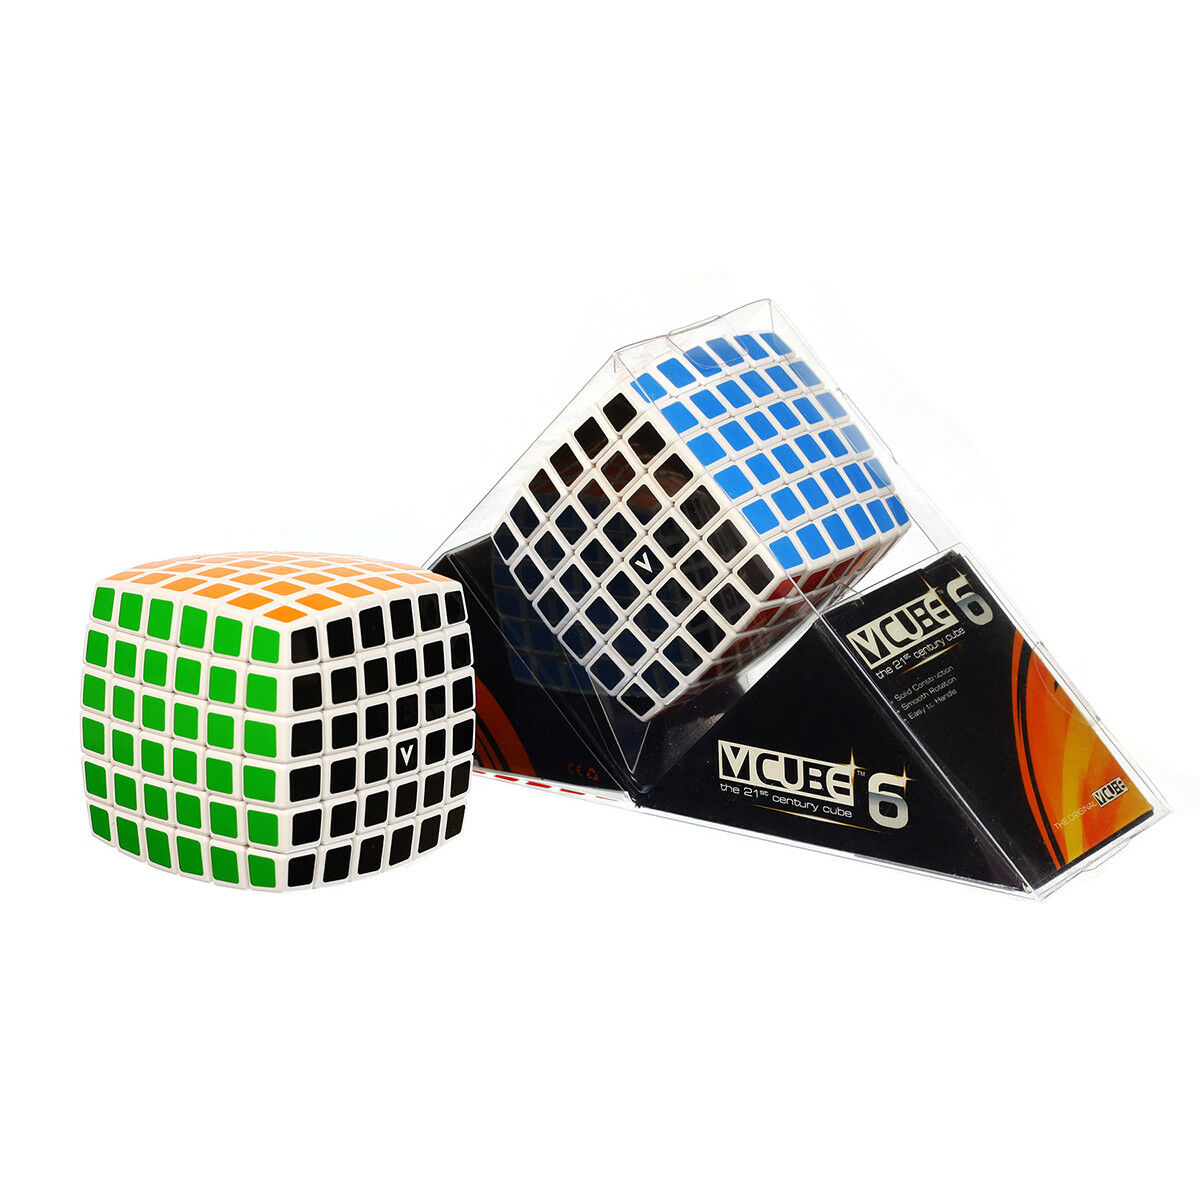 V-Cube 6 Buet Professorterning i høj kvalitet | Køb den her| Professorterningen